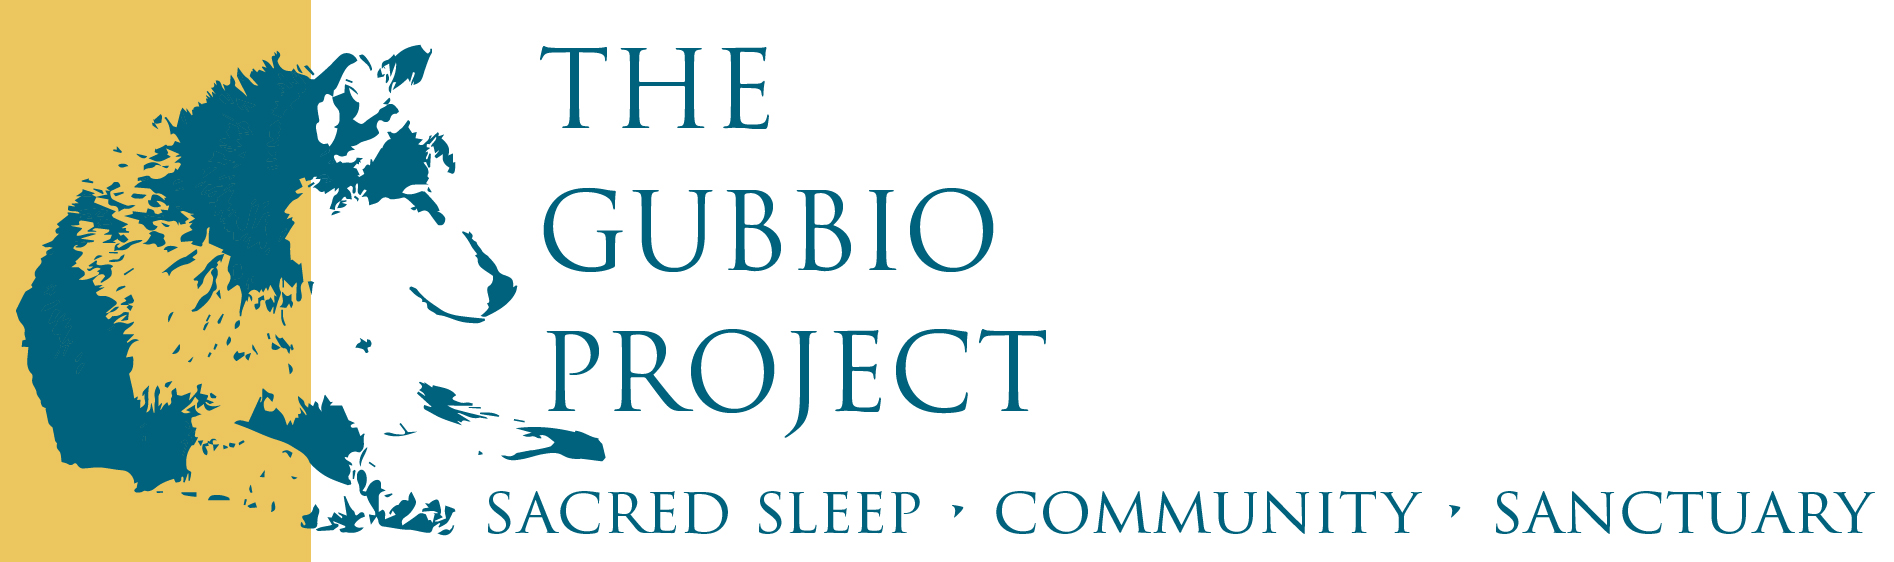 The Gubbio Project logo